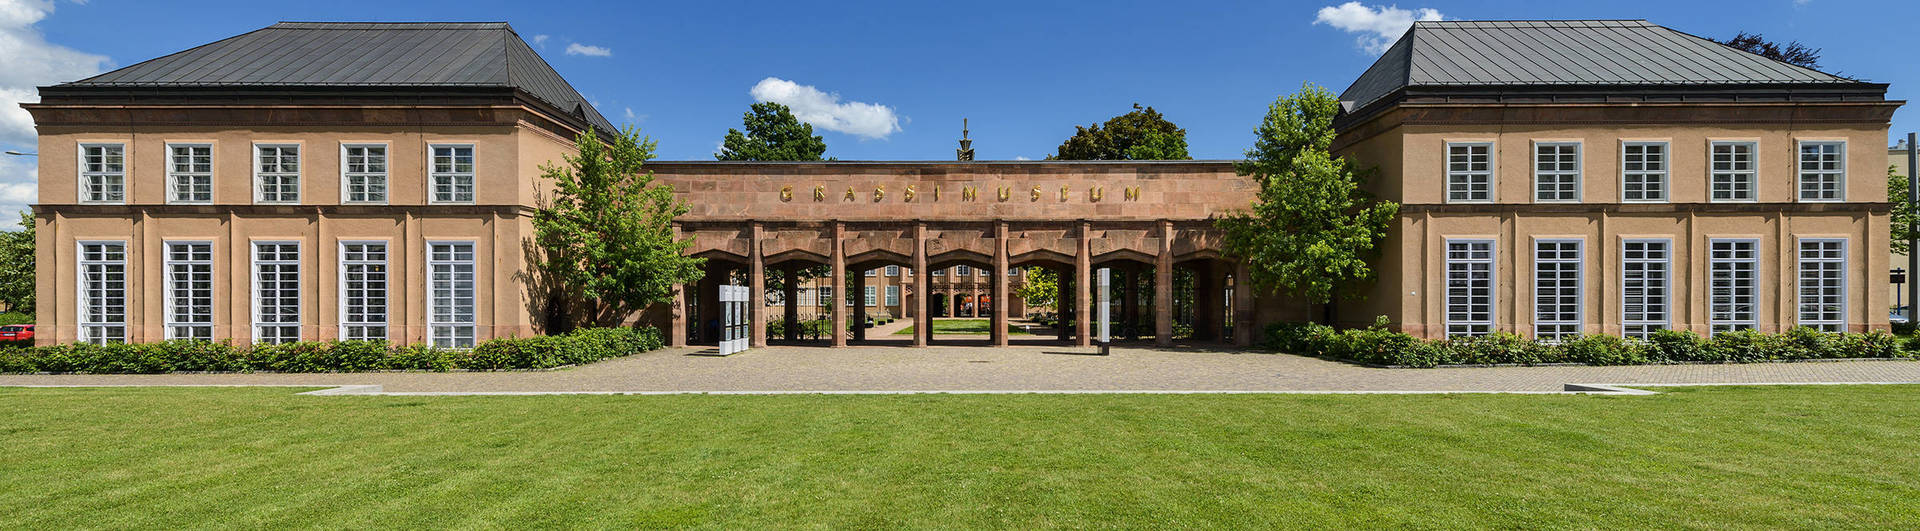 Grassimuseum Leipzig - H4 Hotel Leipzig - Offizielle Webseite